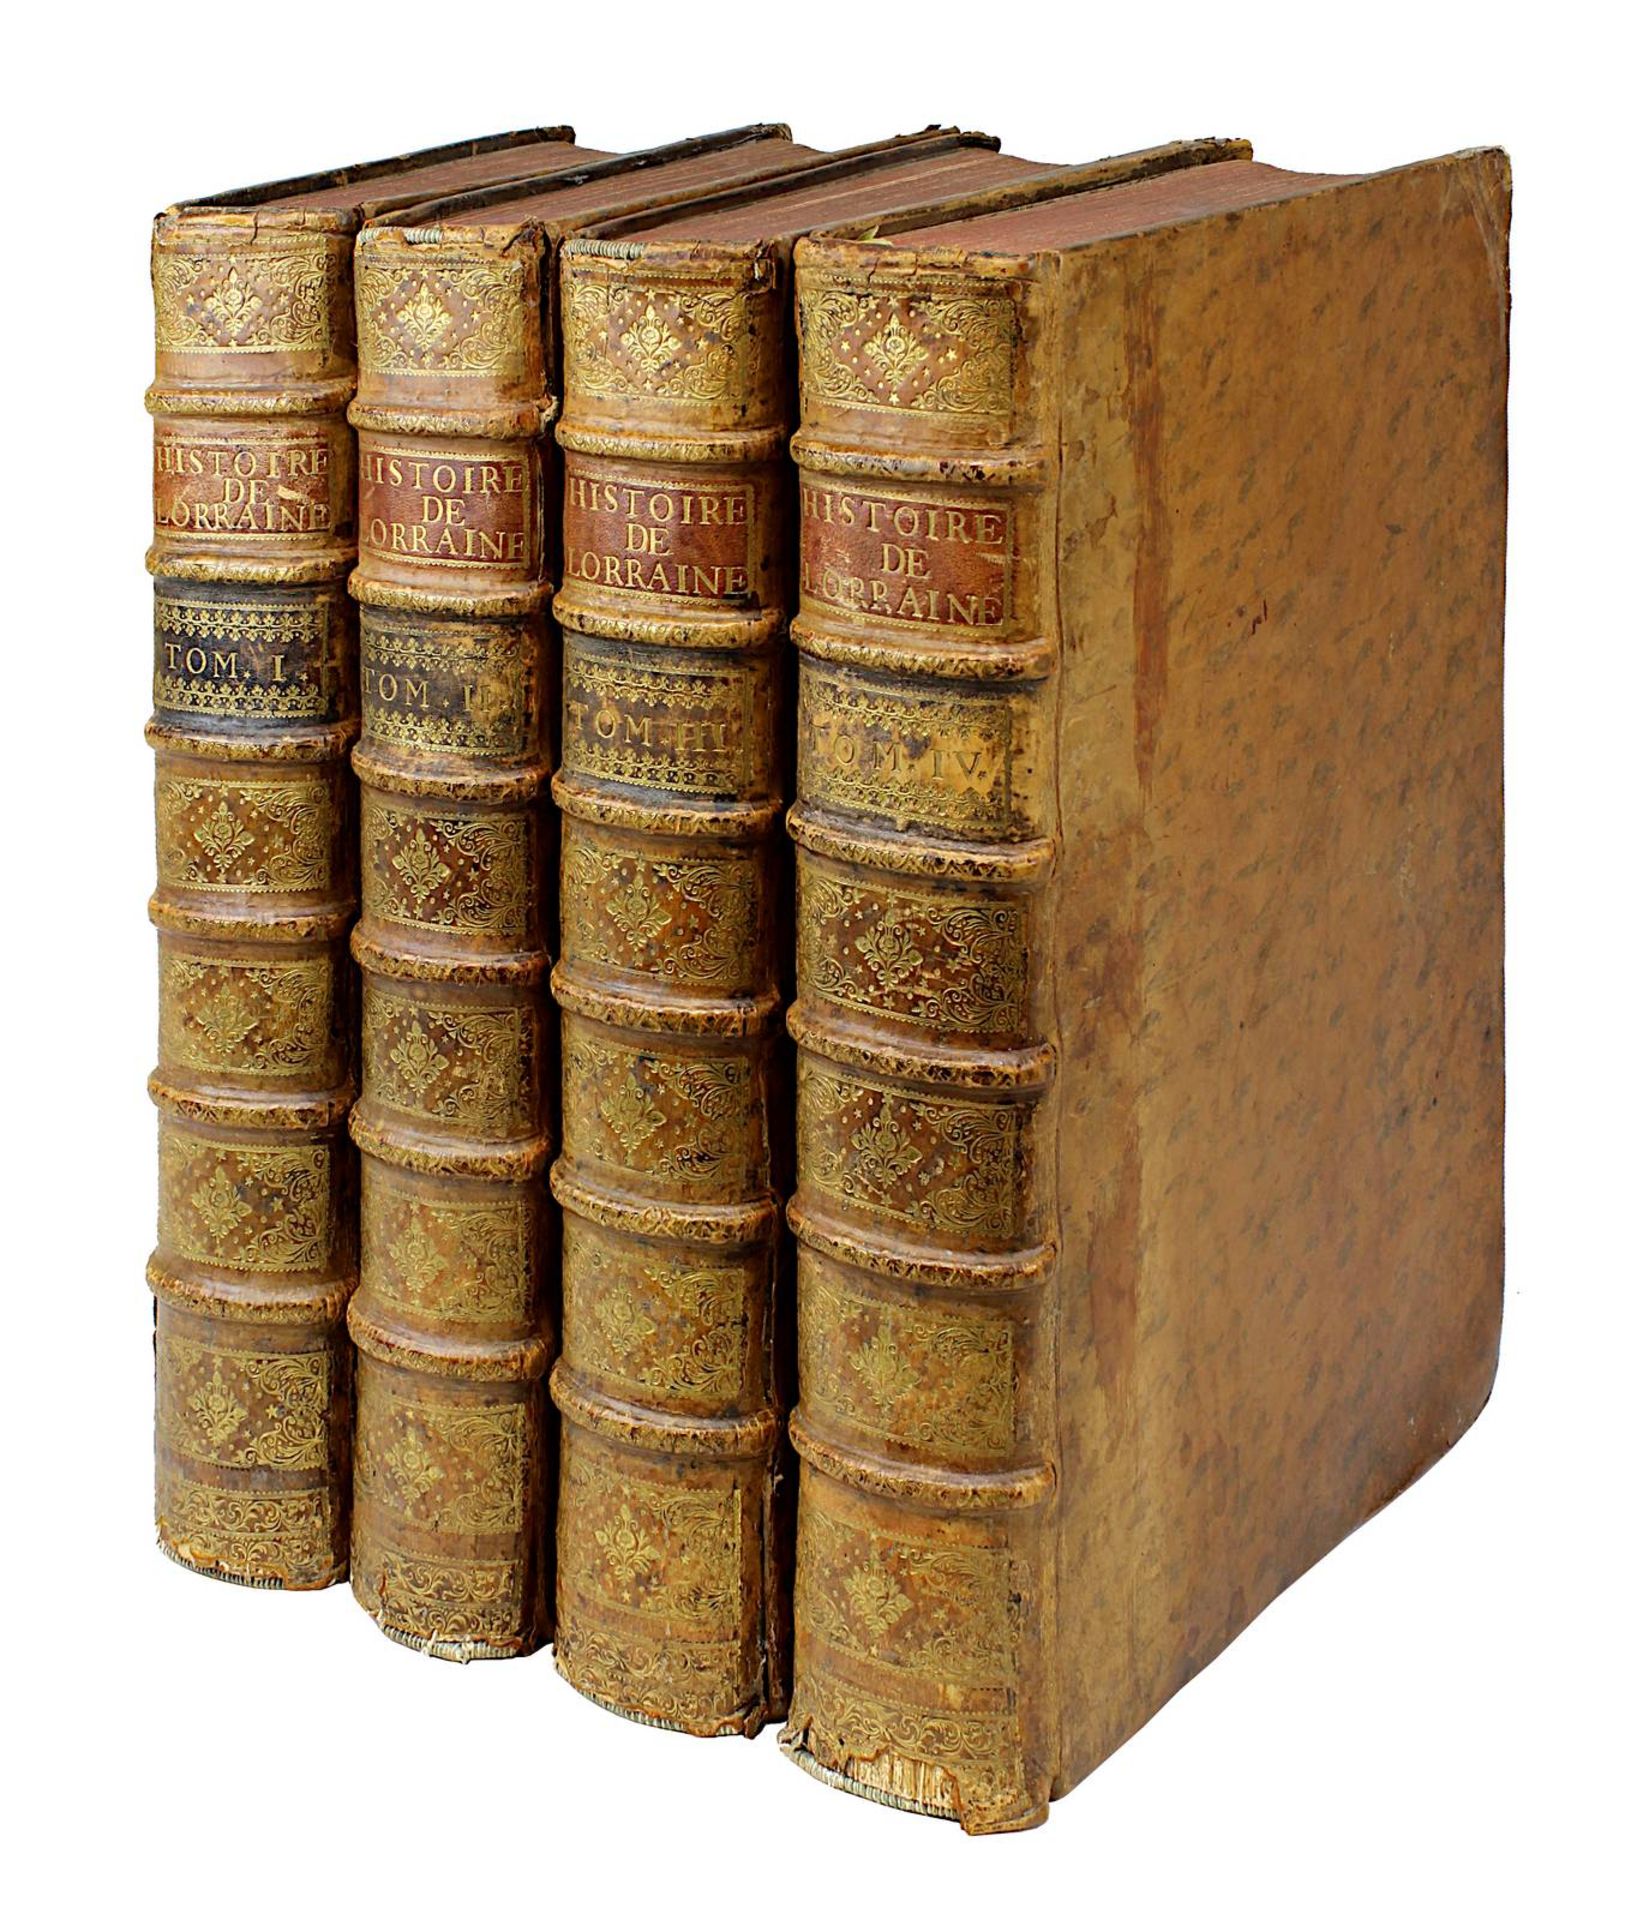 Calmet, Augustin "Histoire Ecclesiastique et civile de Lorraine", Tome I-III, Nancy 1728, und Tome